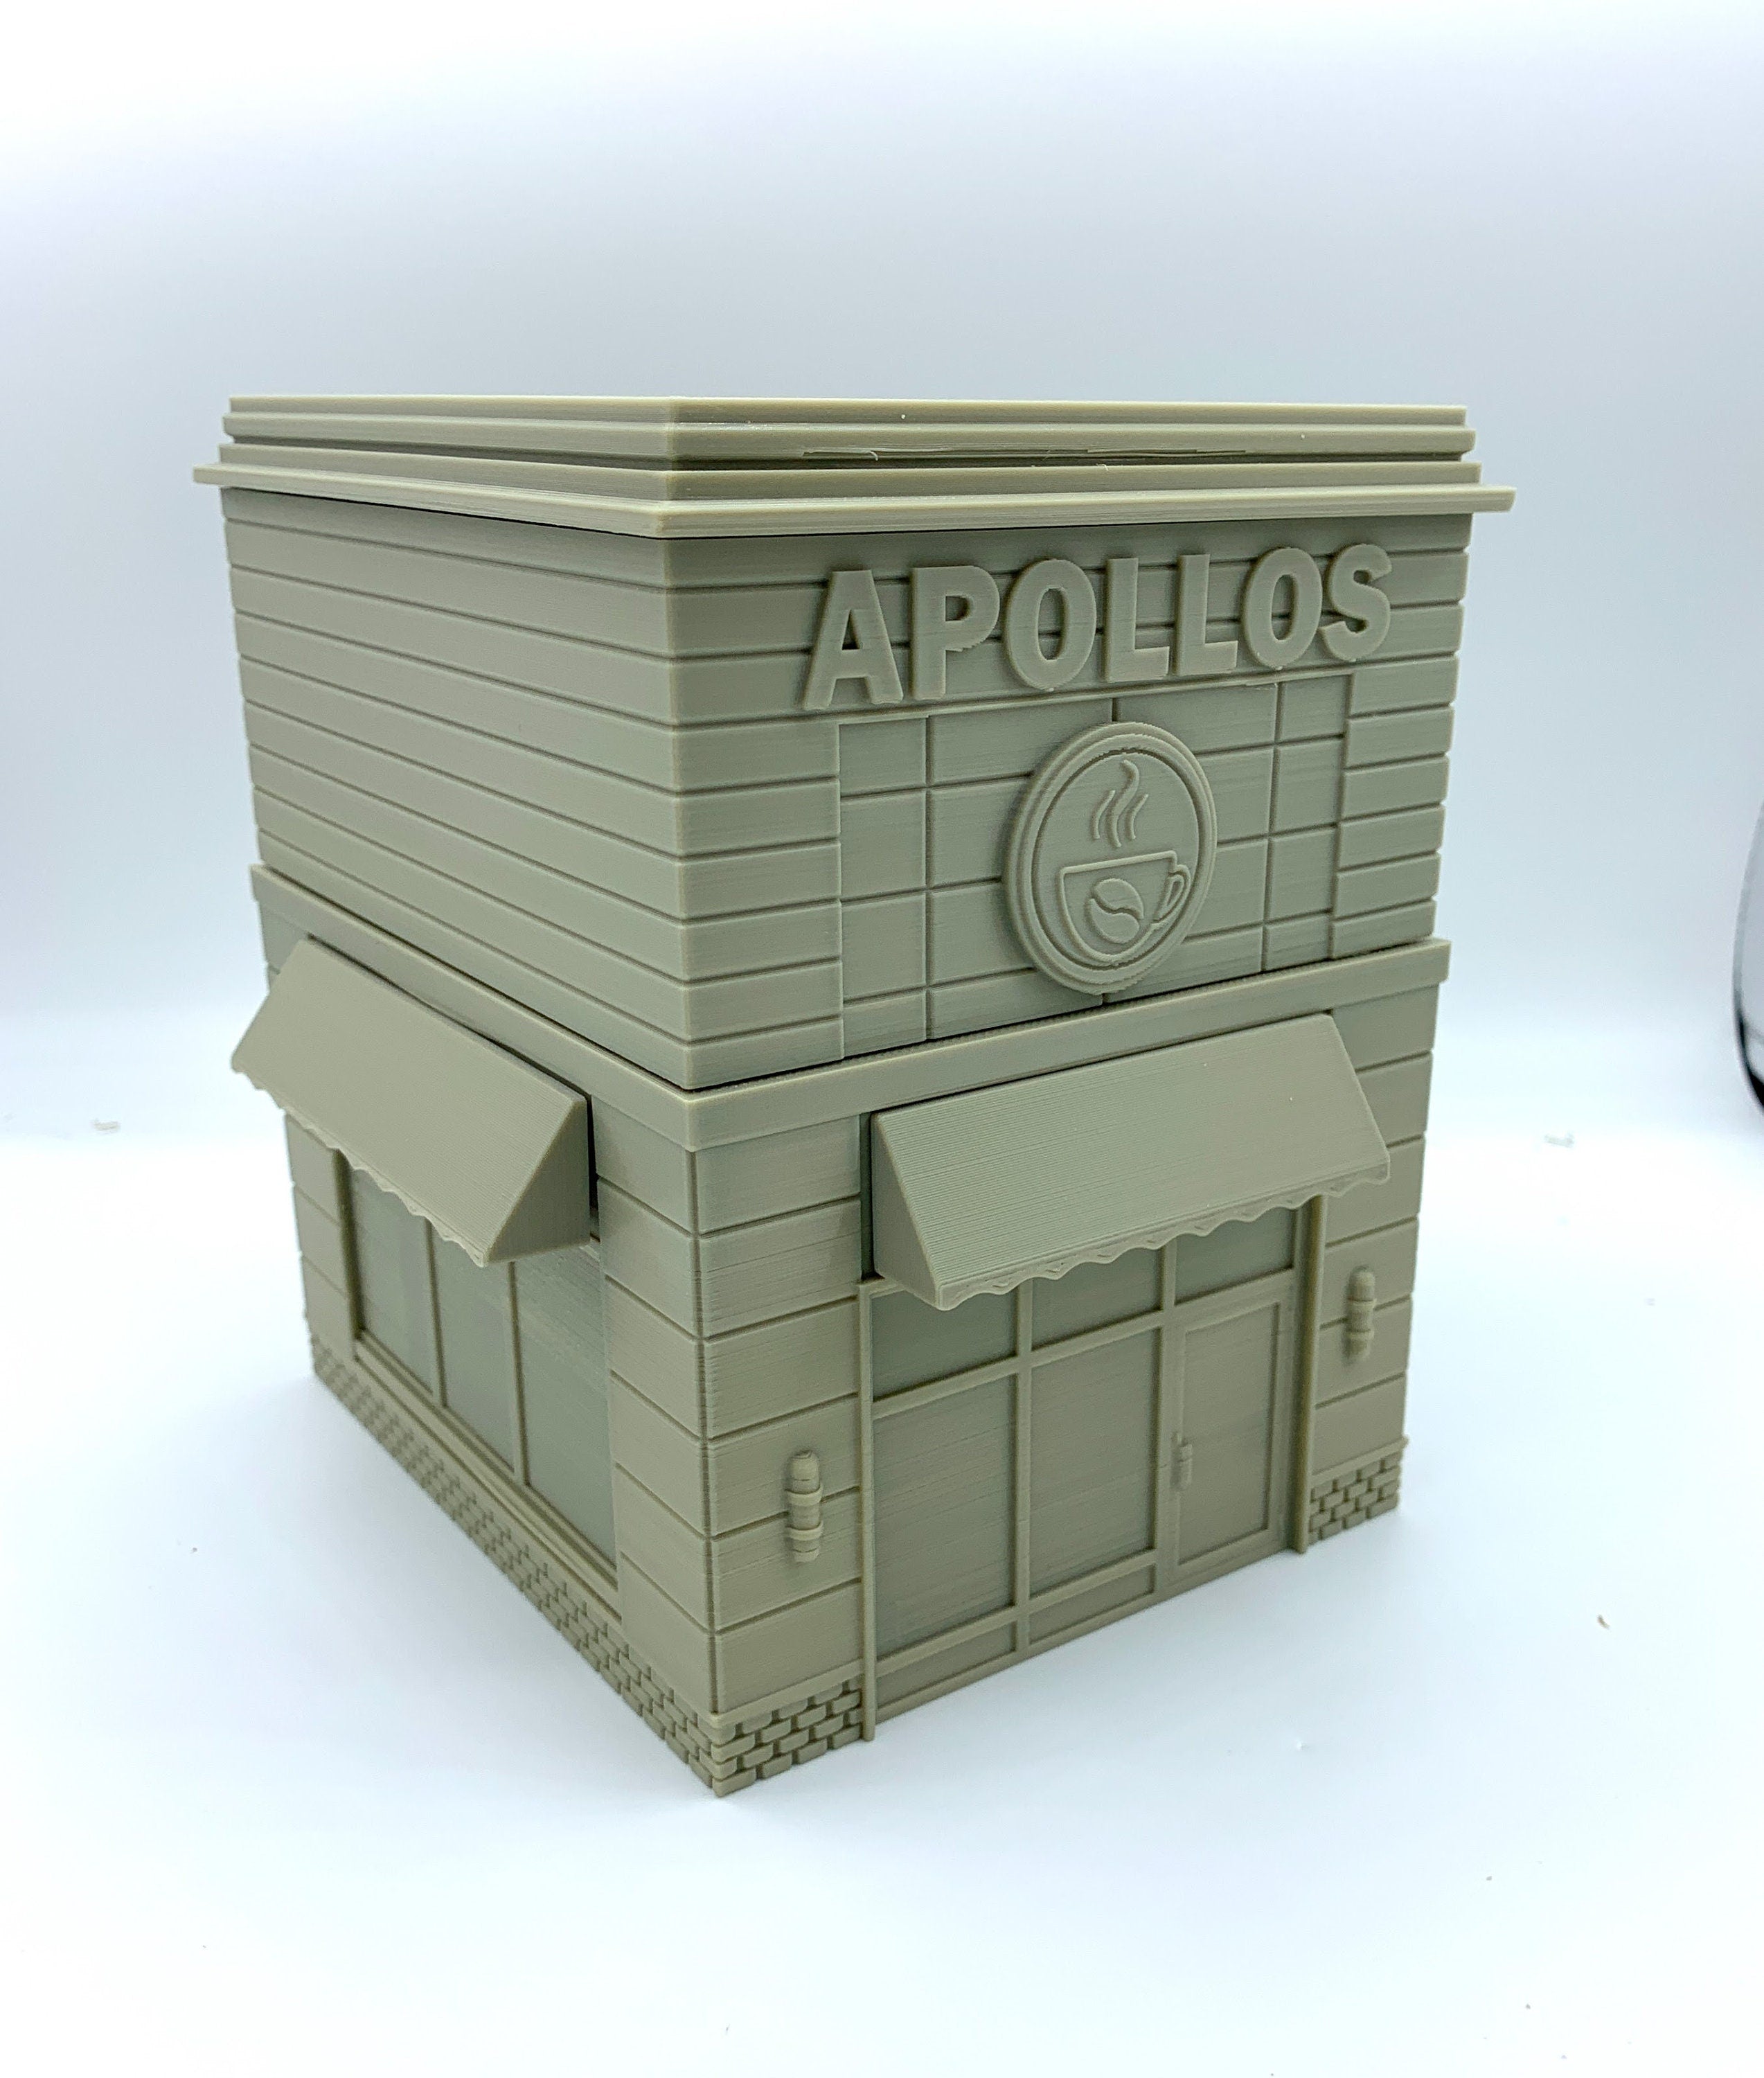 Apollos Coffee Shop / Crisis Protocol Compatible Option / Corvus Games Terrain Licensed Printer / Print to Order